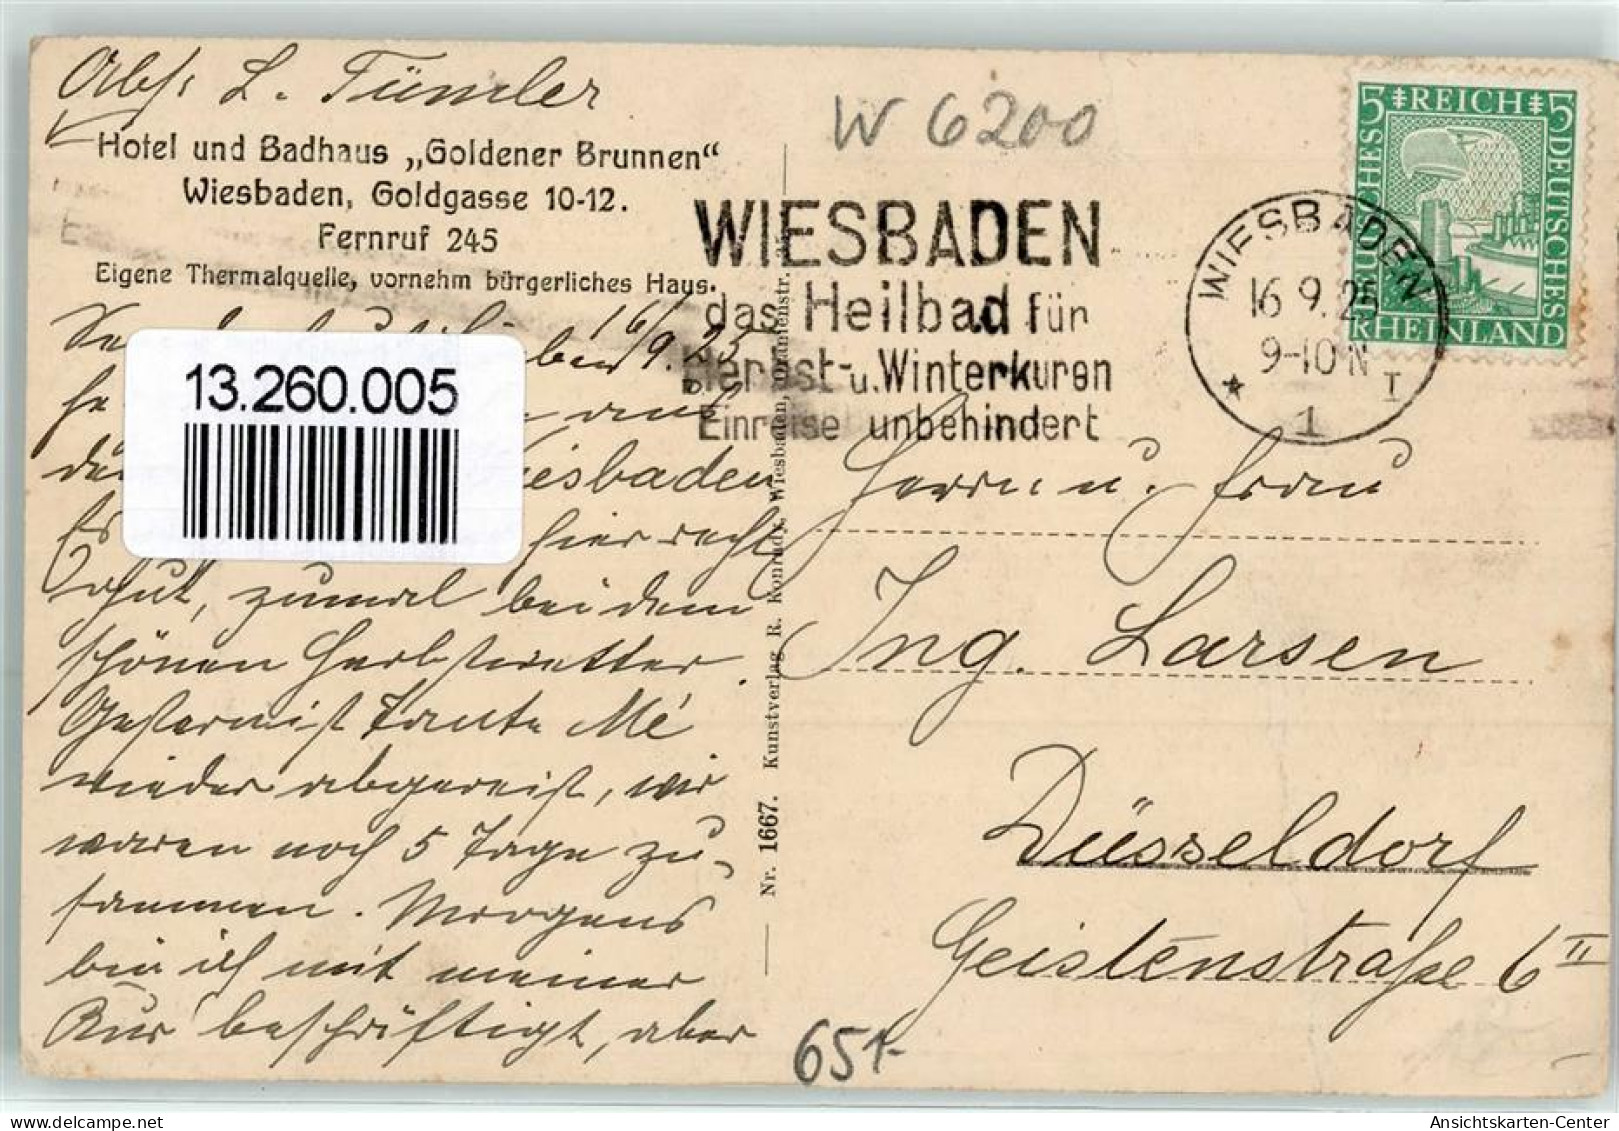 13260005 - Wiesbaden - Wiesbaden